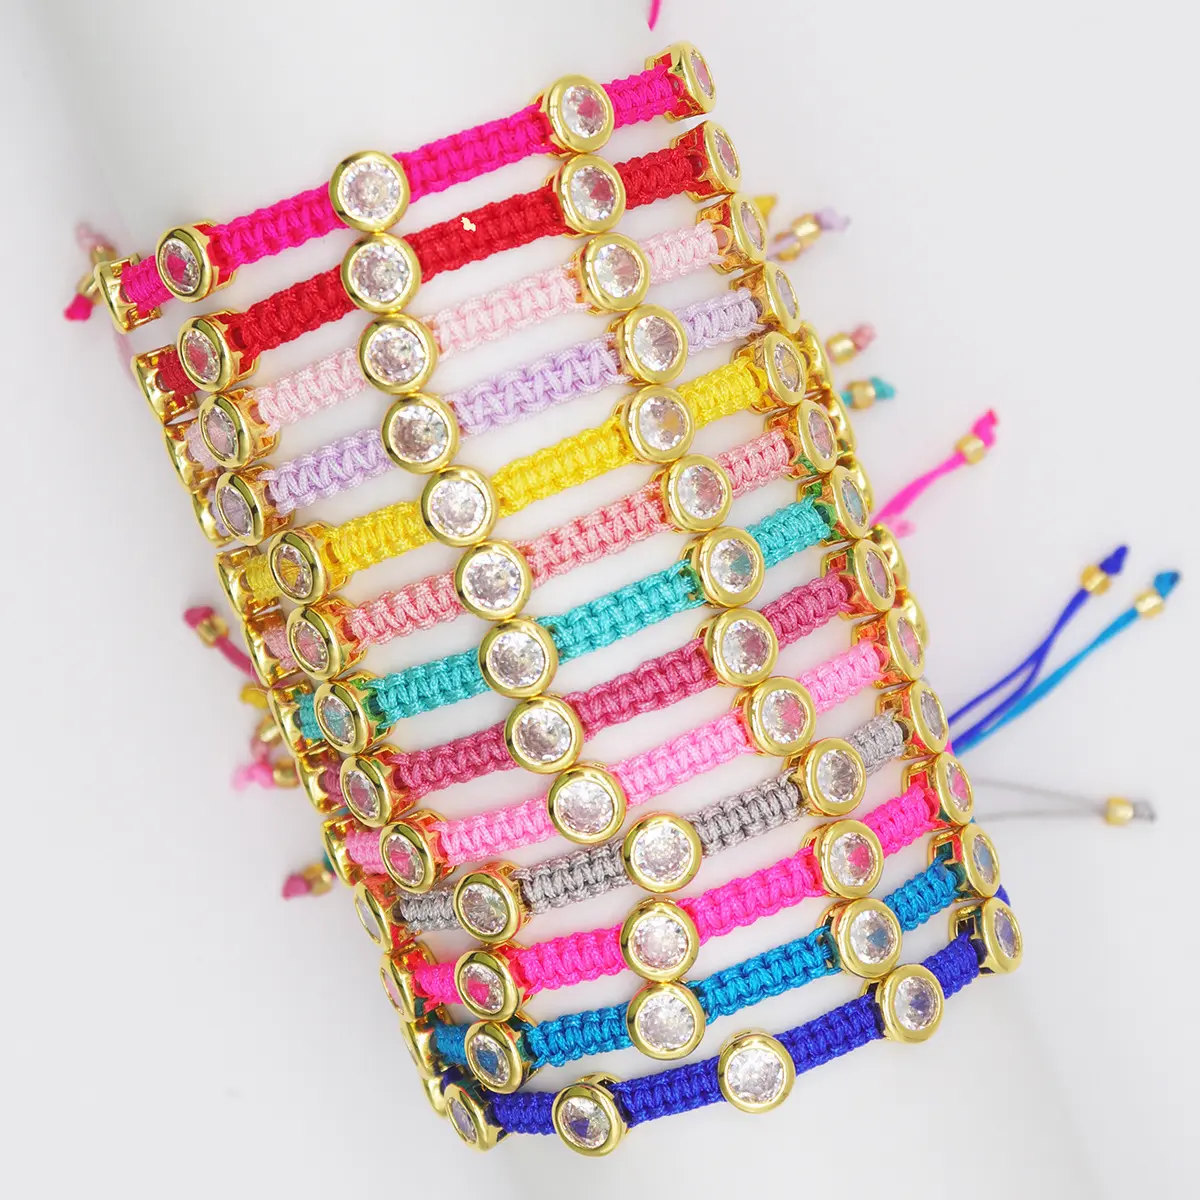 A2306 fashion colorful handmade macrame bracelet boho crystal beads pull adjustable bracelet jewelry